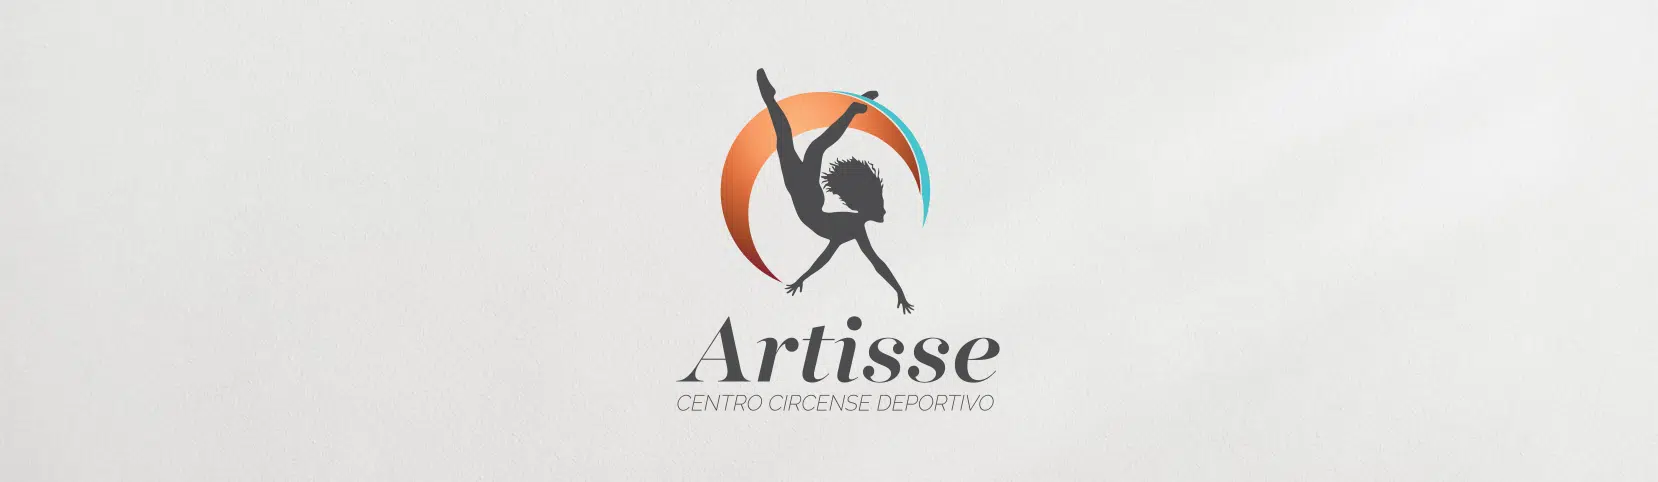 mambo agencia creativa artisse logo